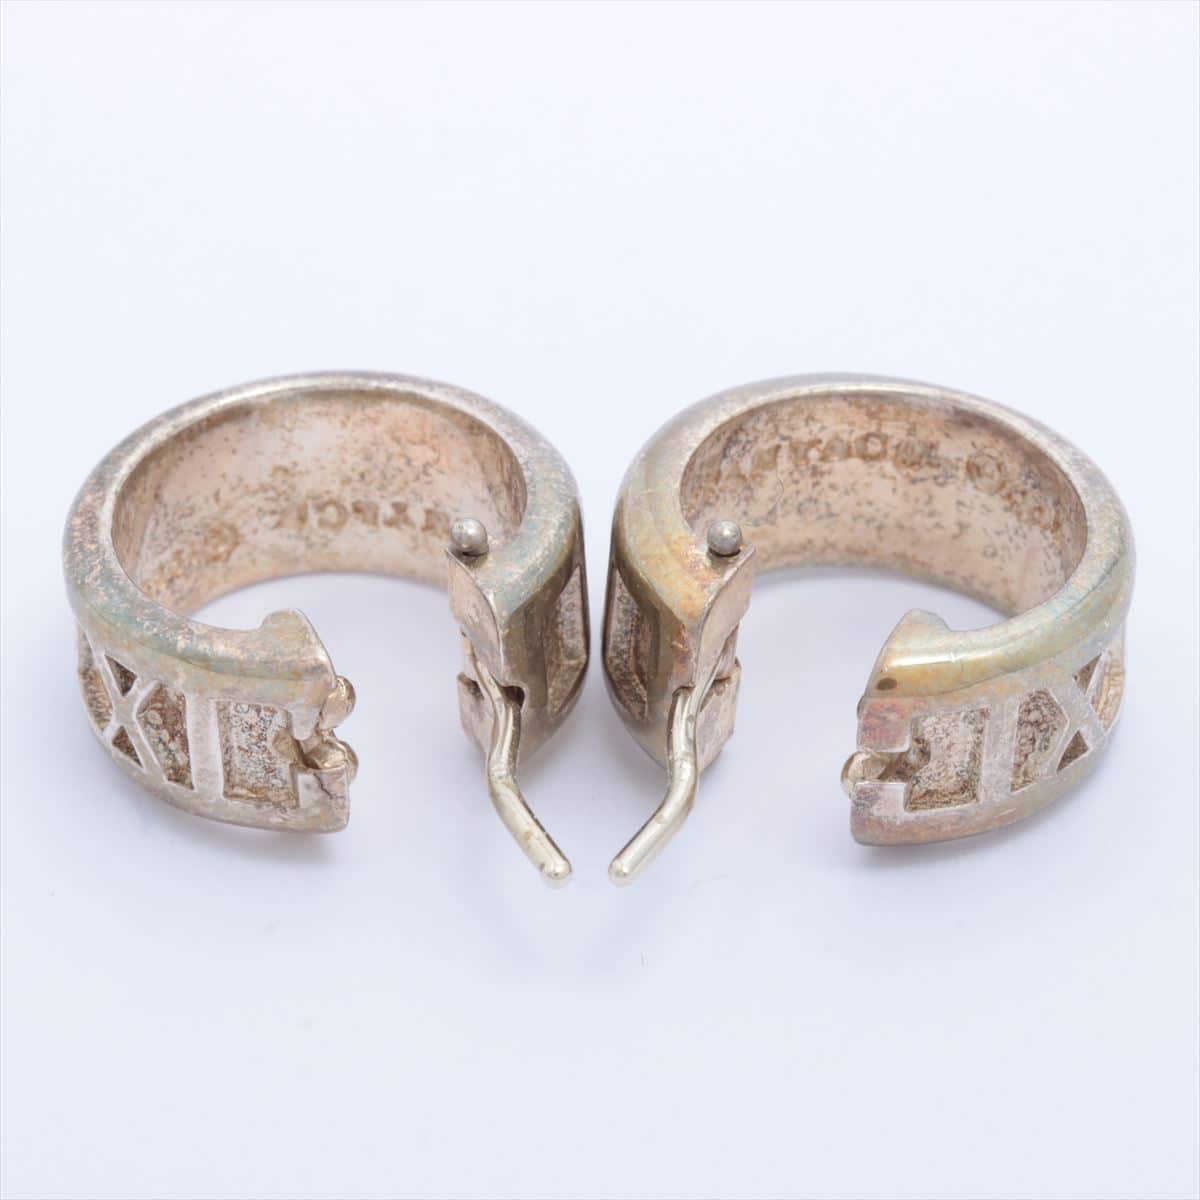 Tiffany Atlas Piercing jewelry (for both ears) 925 7.3g Silver